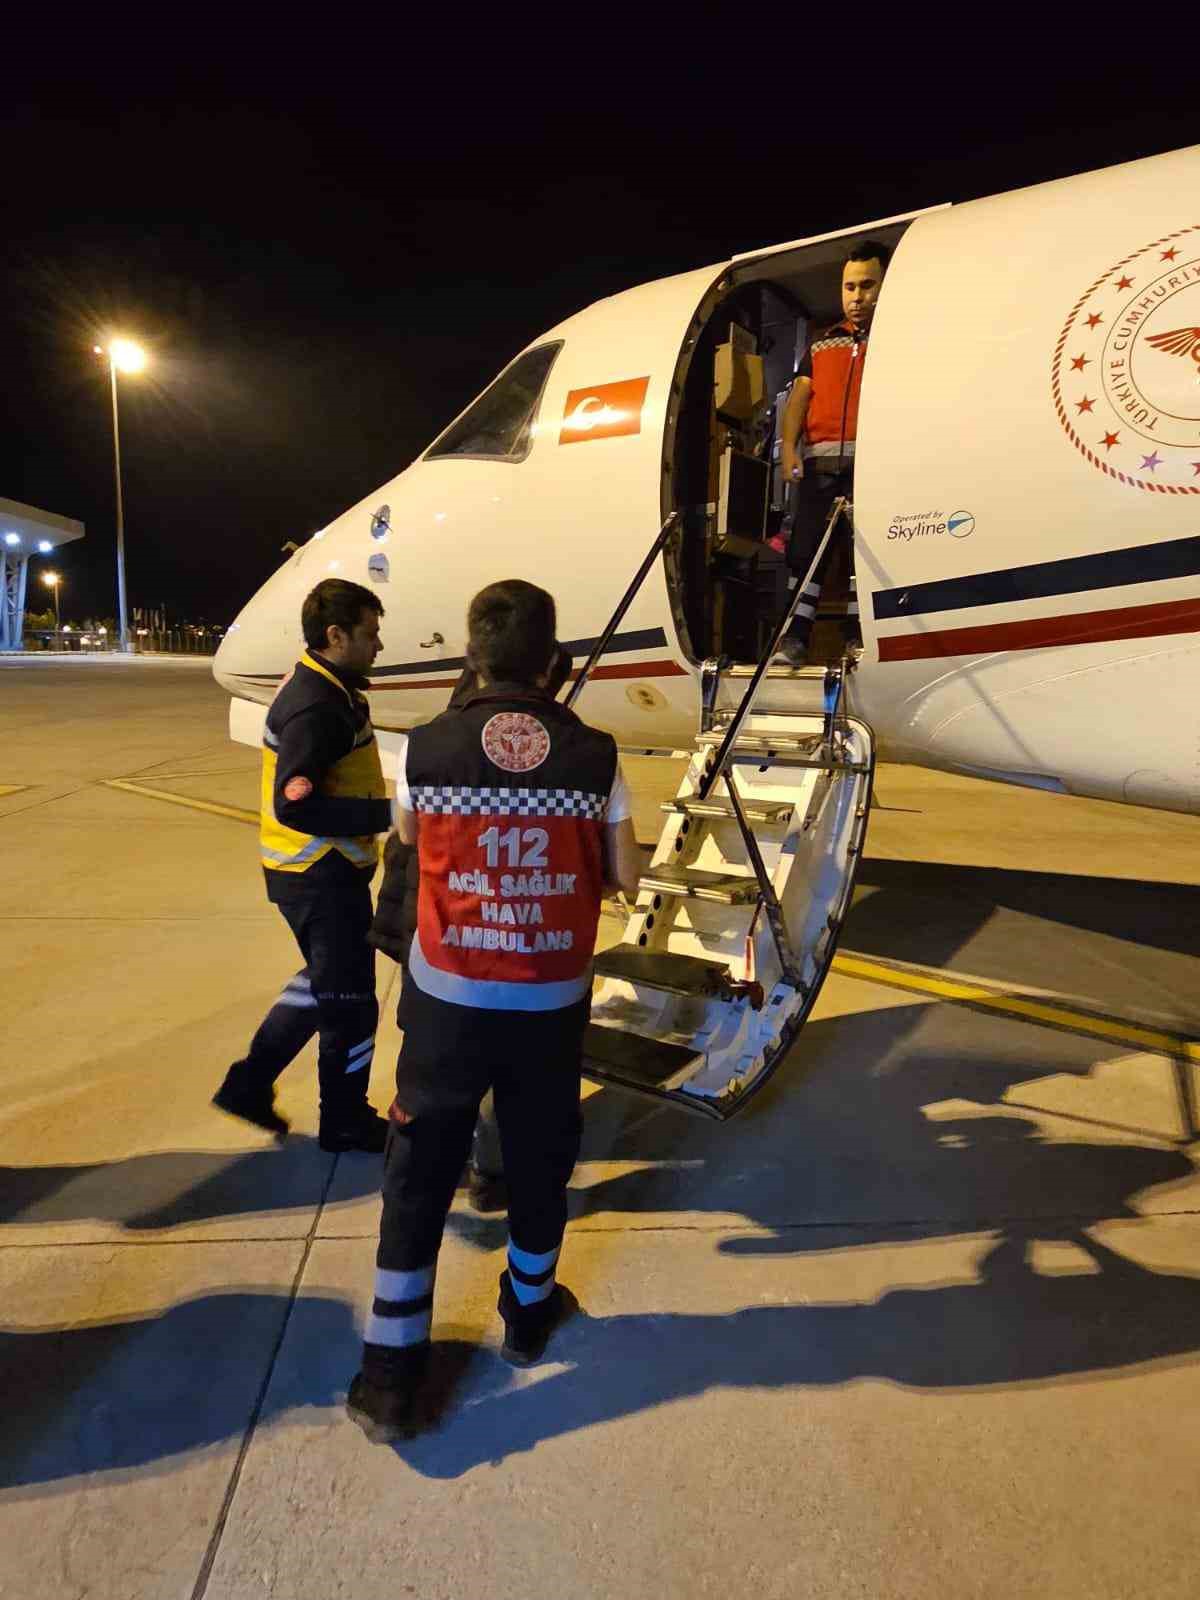 13 yaşındaki genç, uçak ambulans ile Ankara’ya sevk edildi
